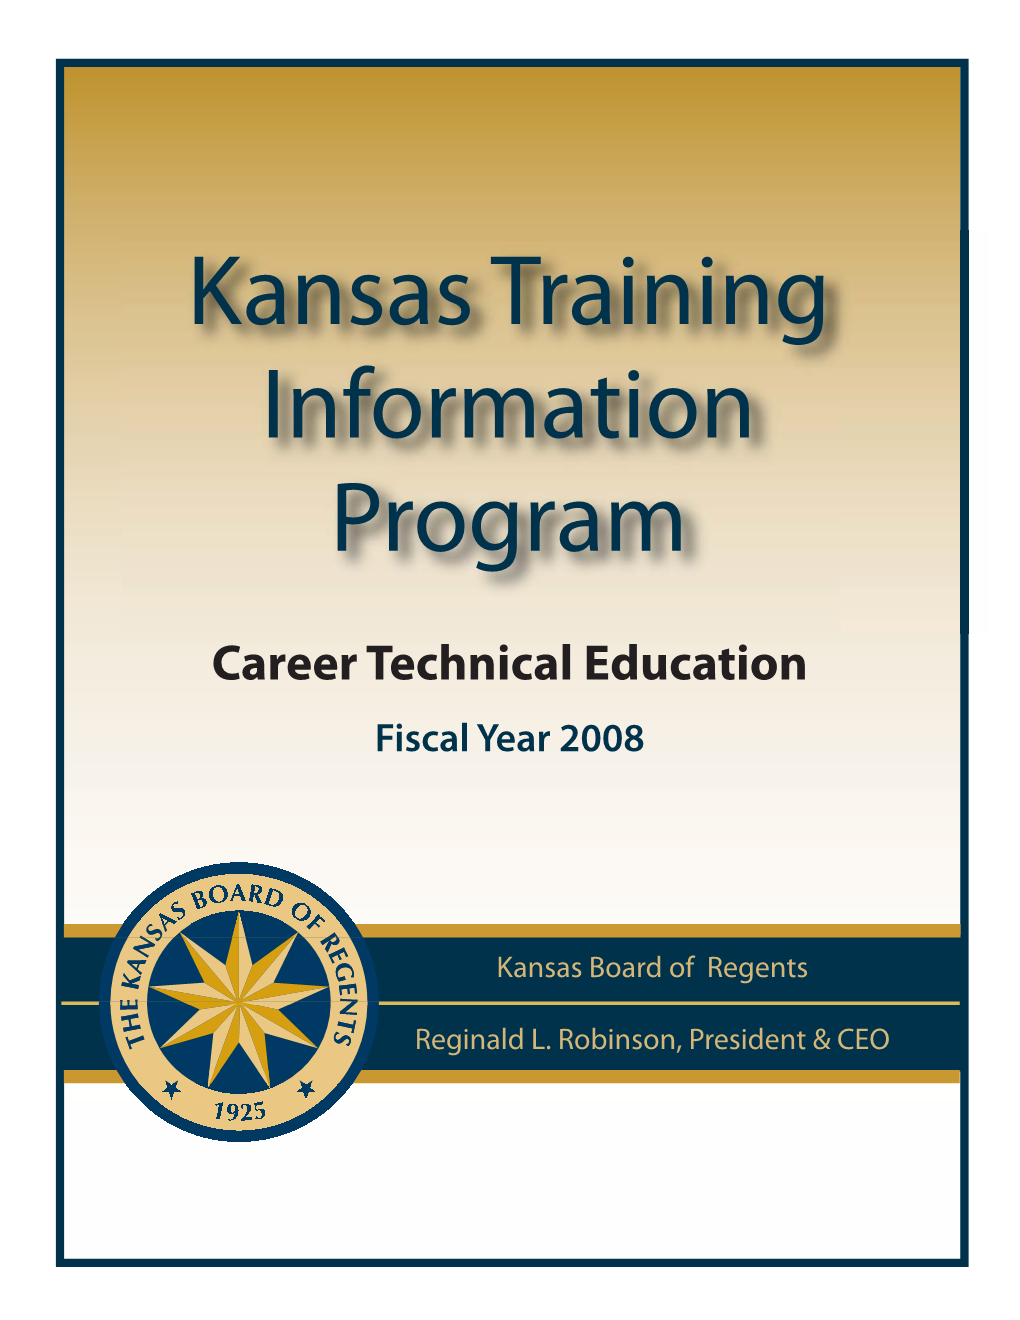 Kansas Training Information Program